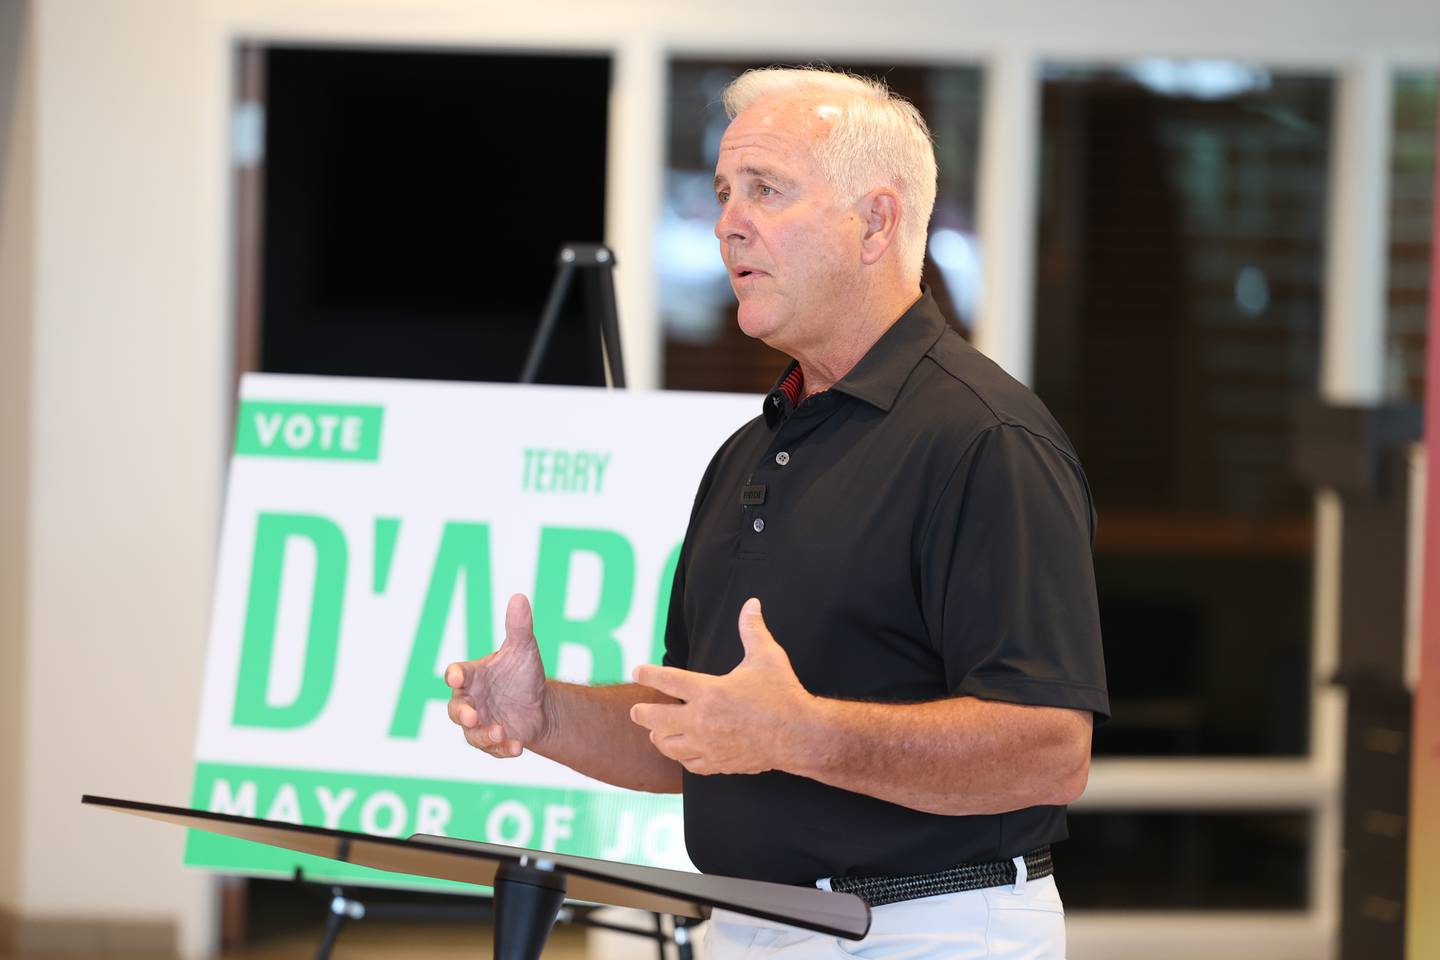 Terry D’Arcy announces he will be running for Joliet Mayor at his GMC dealership in Joliet. Wednesday, June 15, 2022 in Joliet.